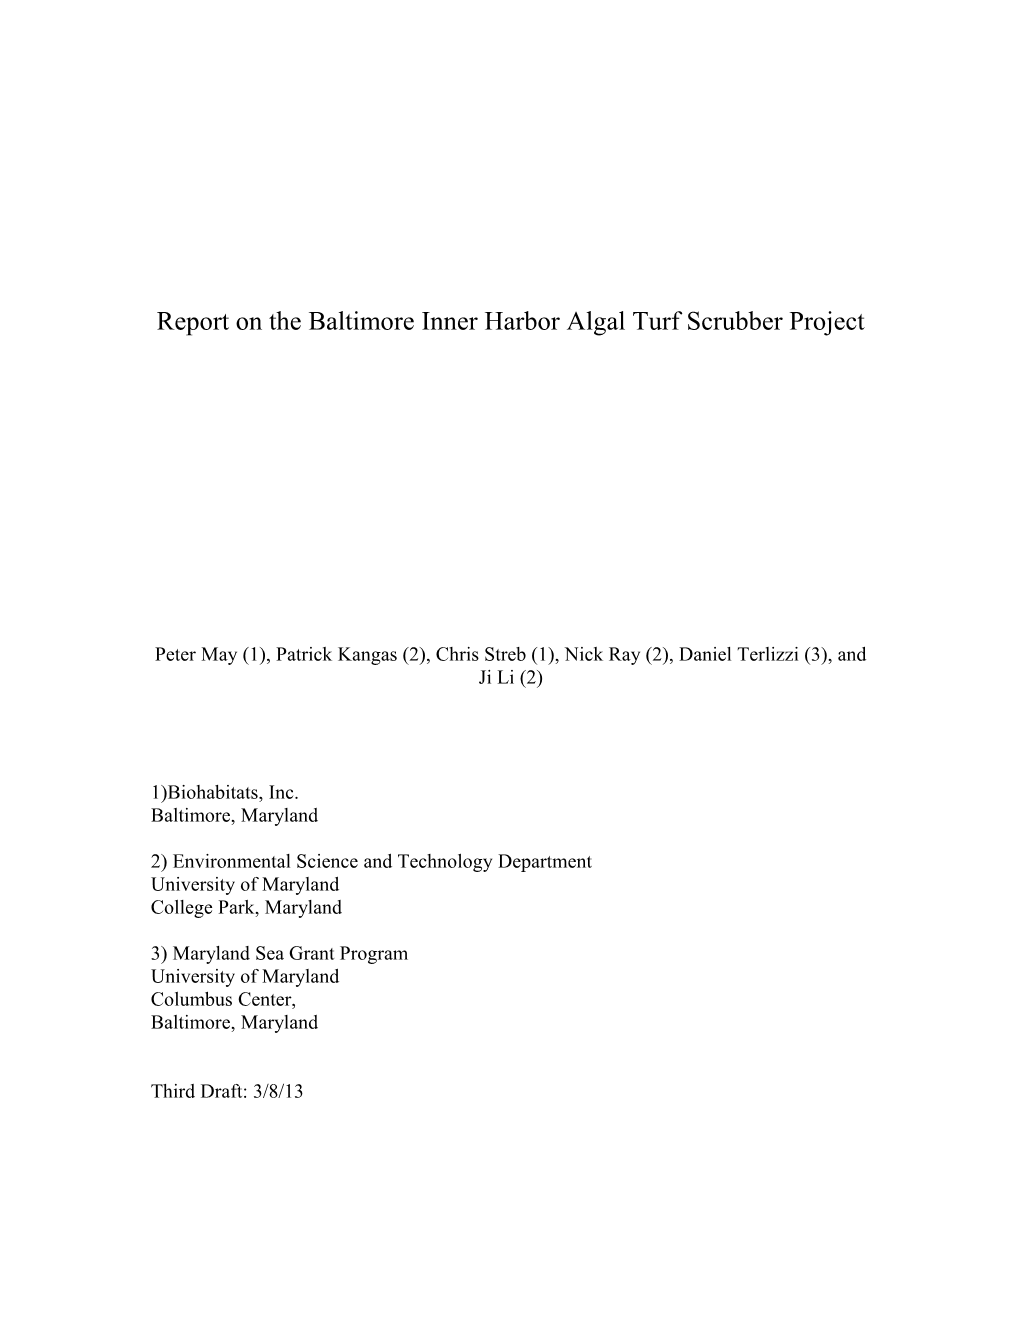 Progress Report on the Susquehanna River Algal Turf Scrubber Project